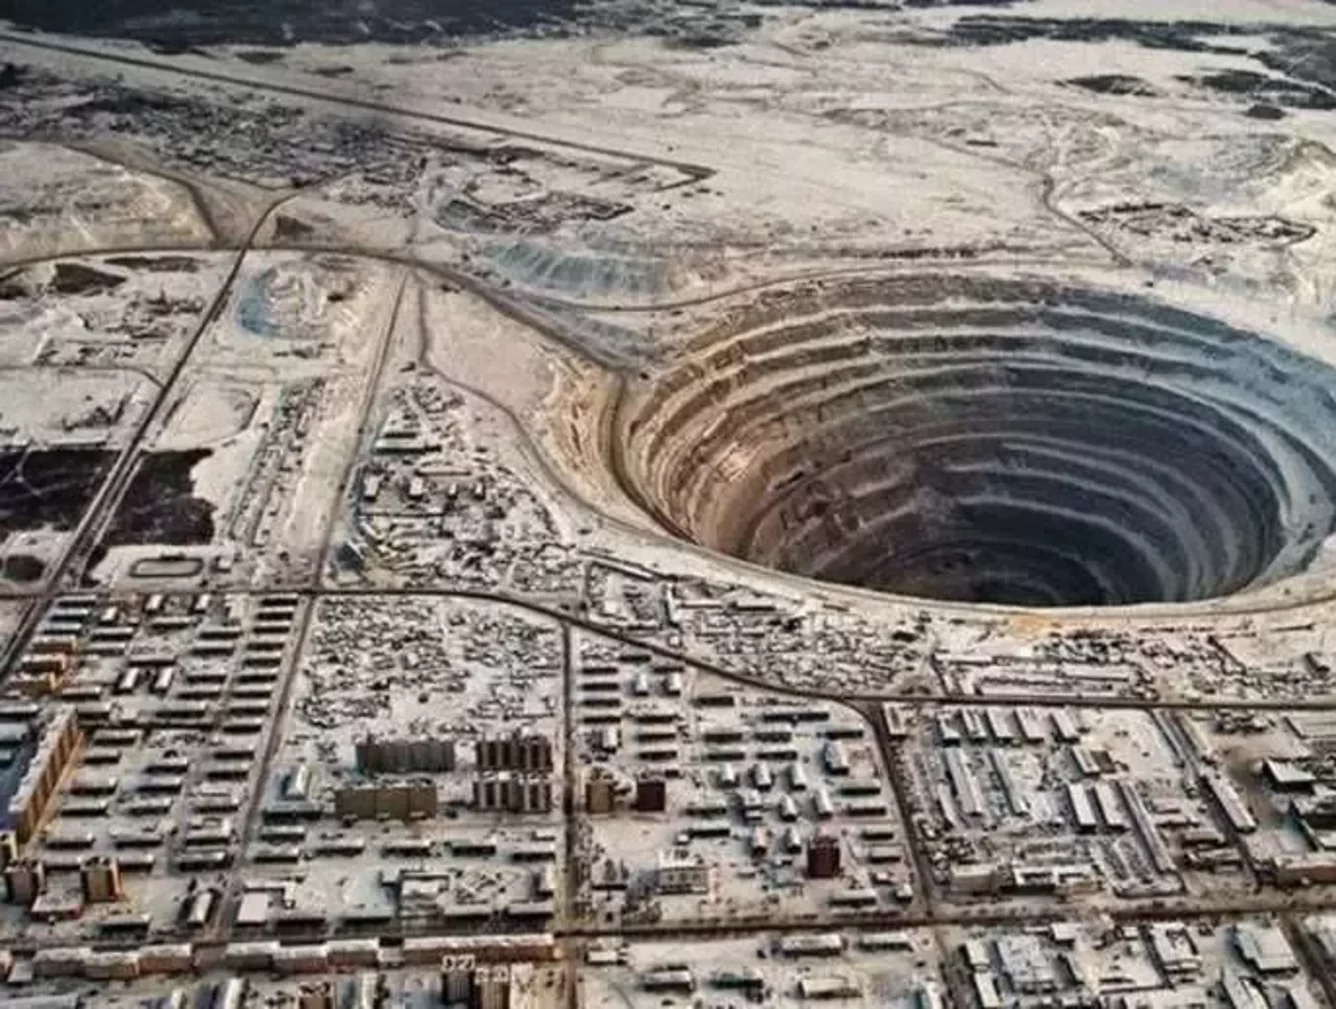 diamond in a mine